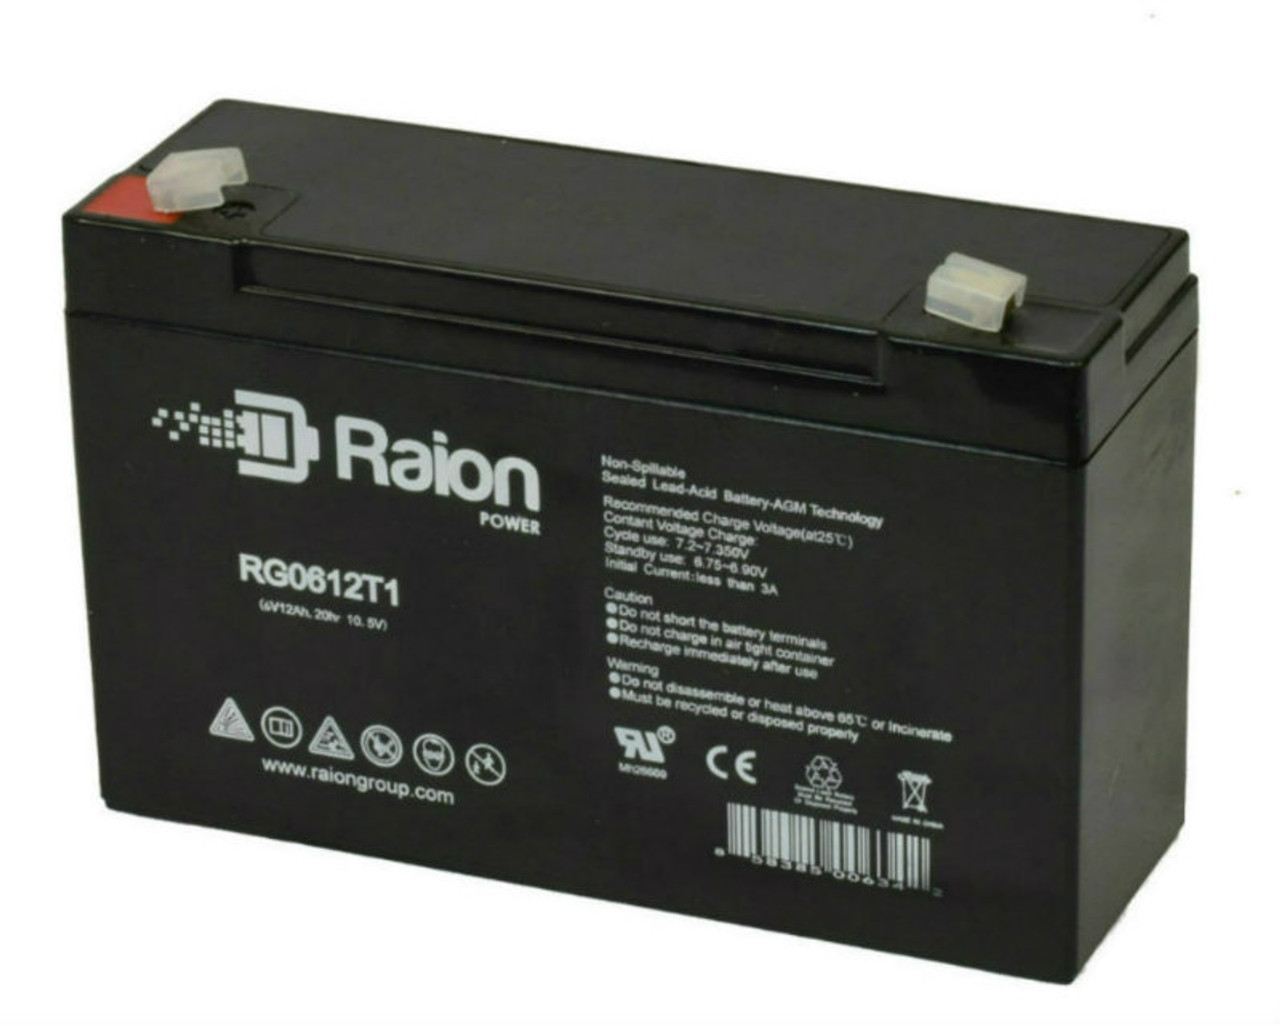 Raion Power RG06120T1 Replacement Emergency Light Battery for Sonnenschein M300